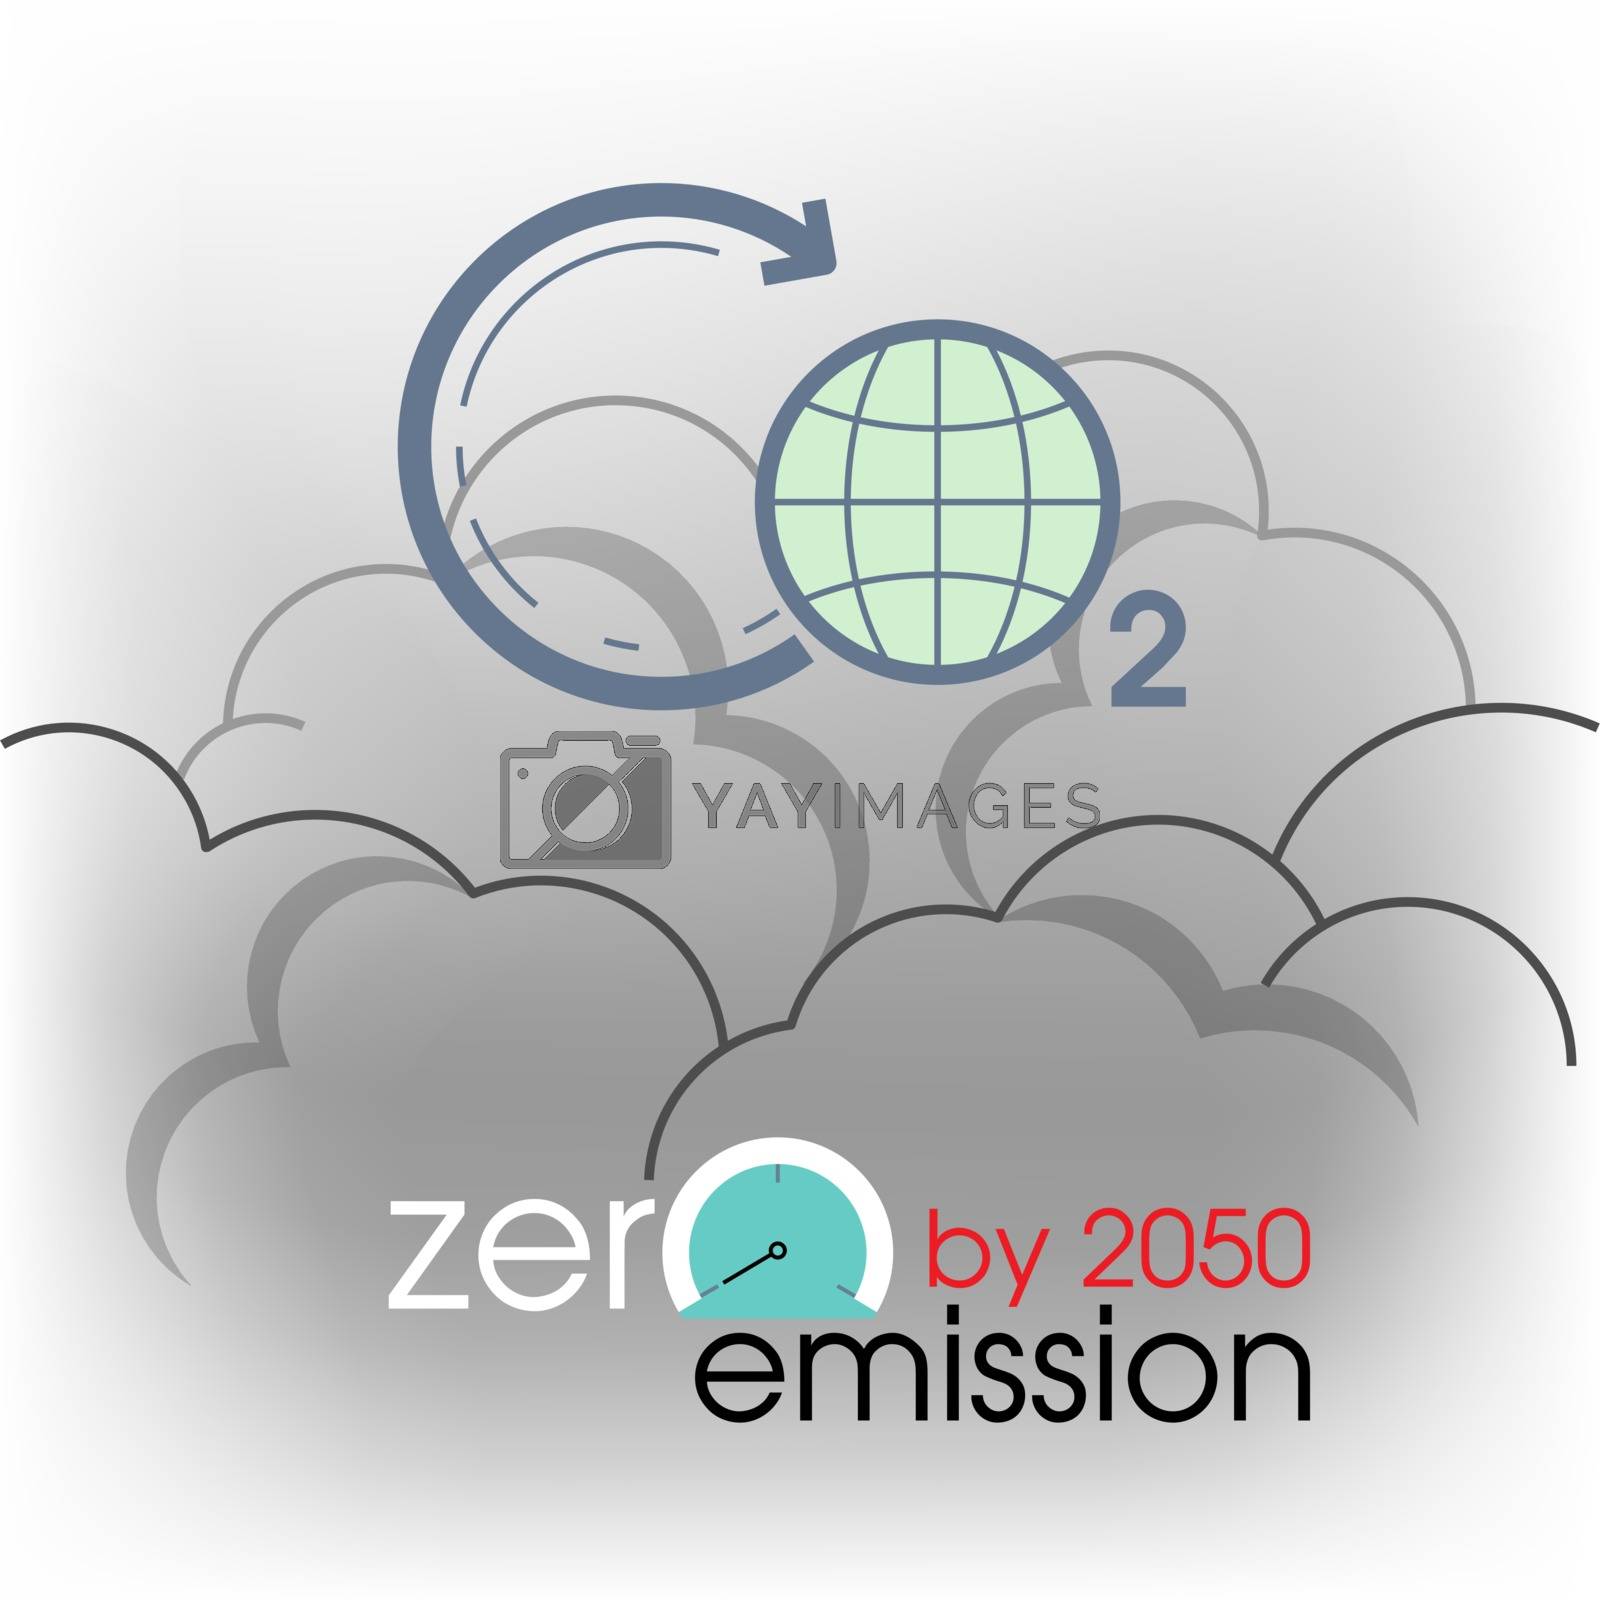 Royalty free image of Zero Emission 2050 by Chiamsakul